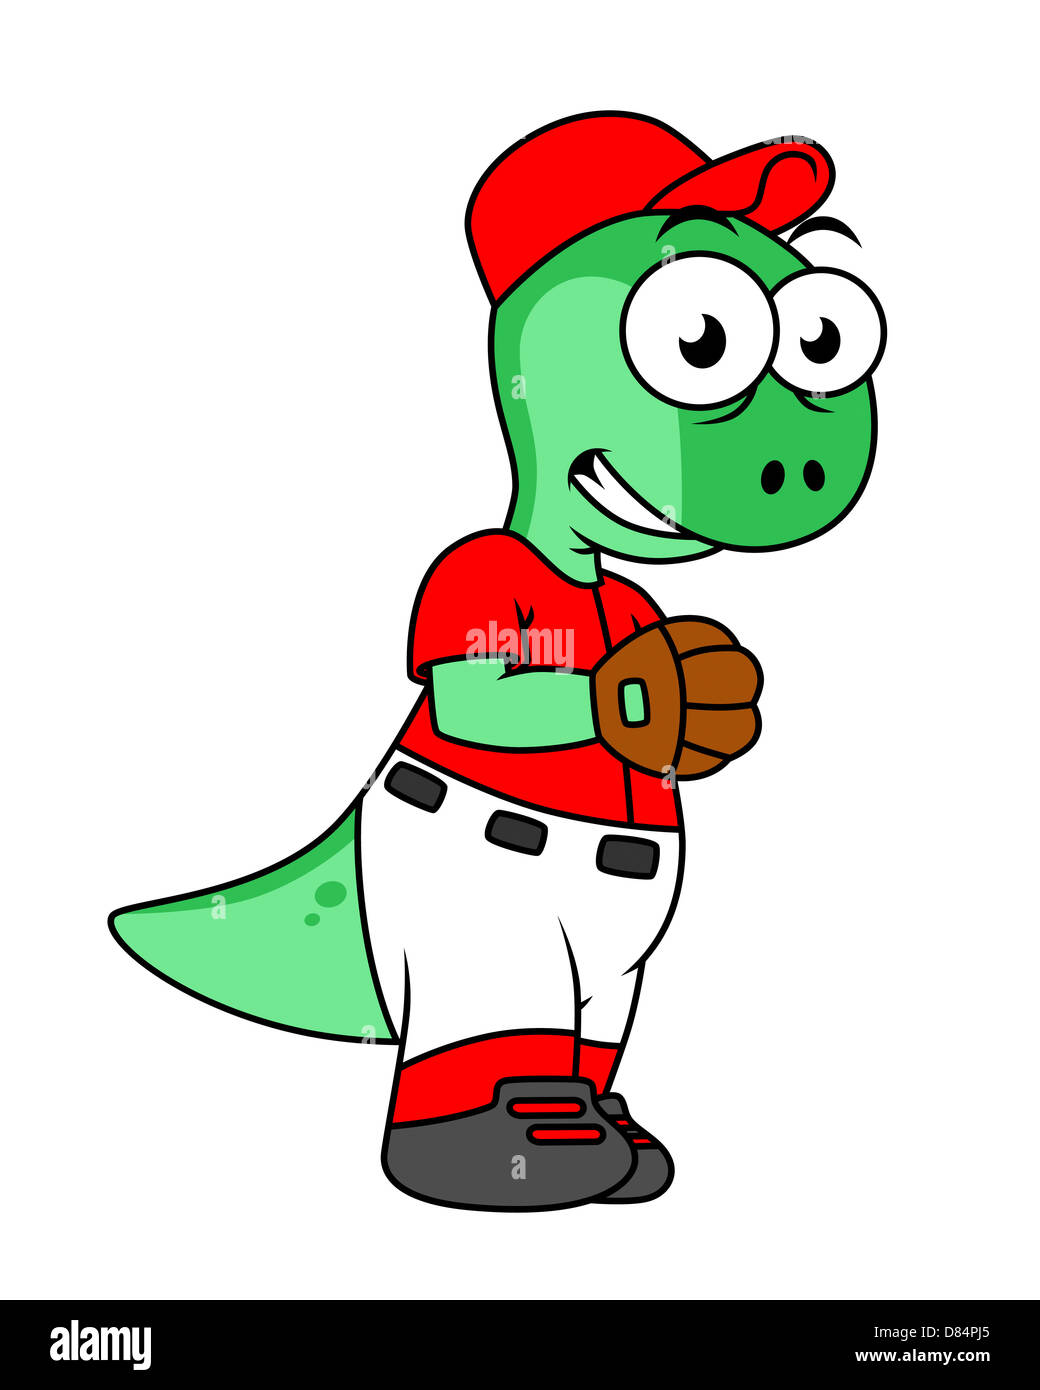 Illustration of a Pachycephalosaurus baseball pitcher. Stock Photo